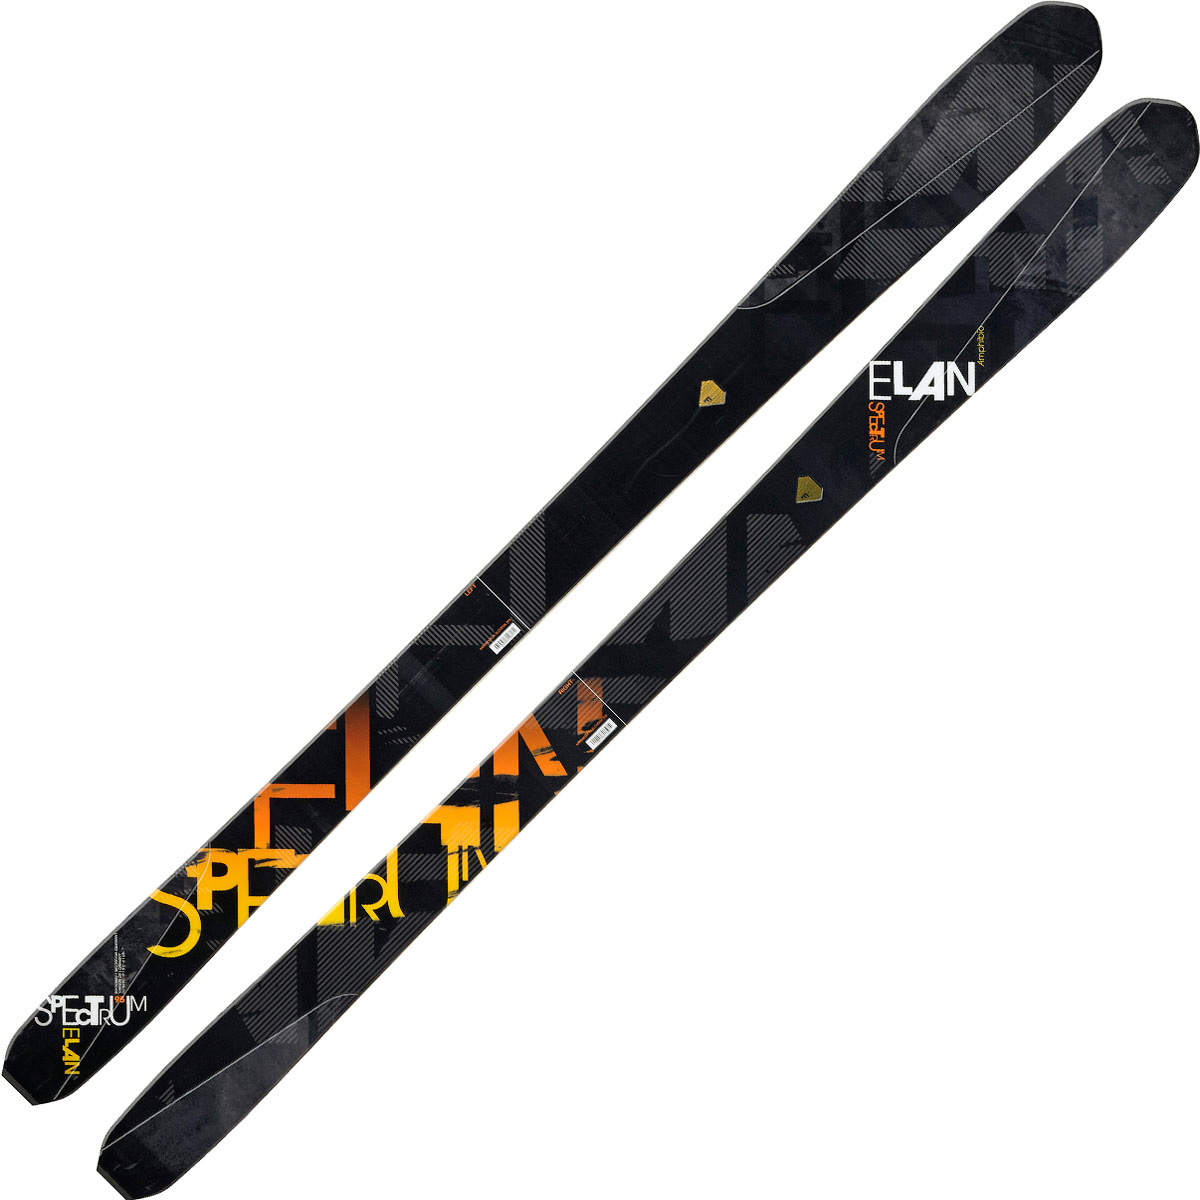 natuurlijk Verminderen Luchtvaart Clearance – New Elan Spectrum 95 ski size 180 cm - ( Without Bindings /  Flat ) - Goskand Ski & Soccer Store